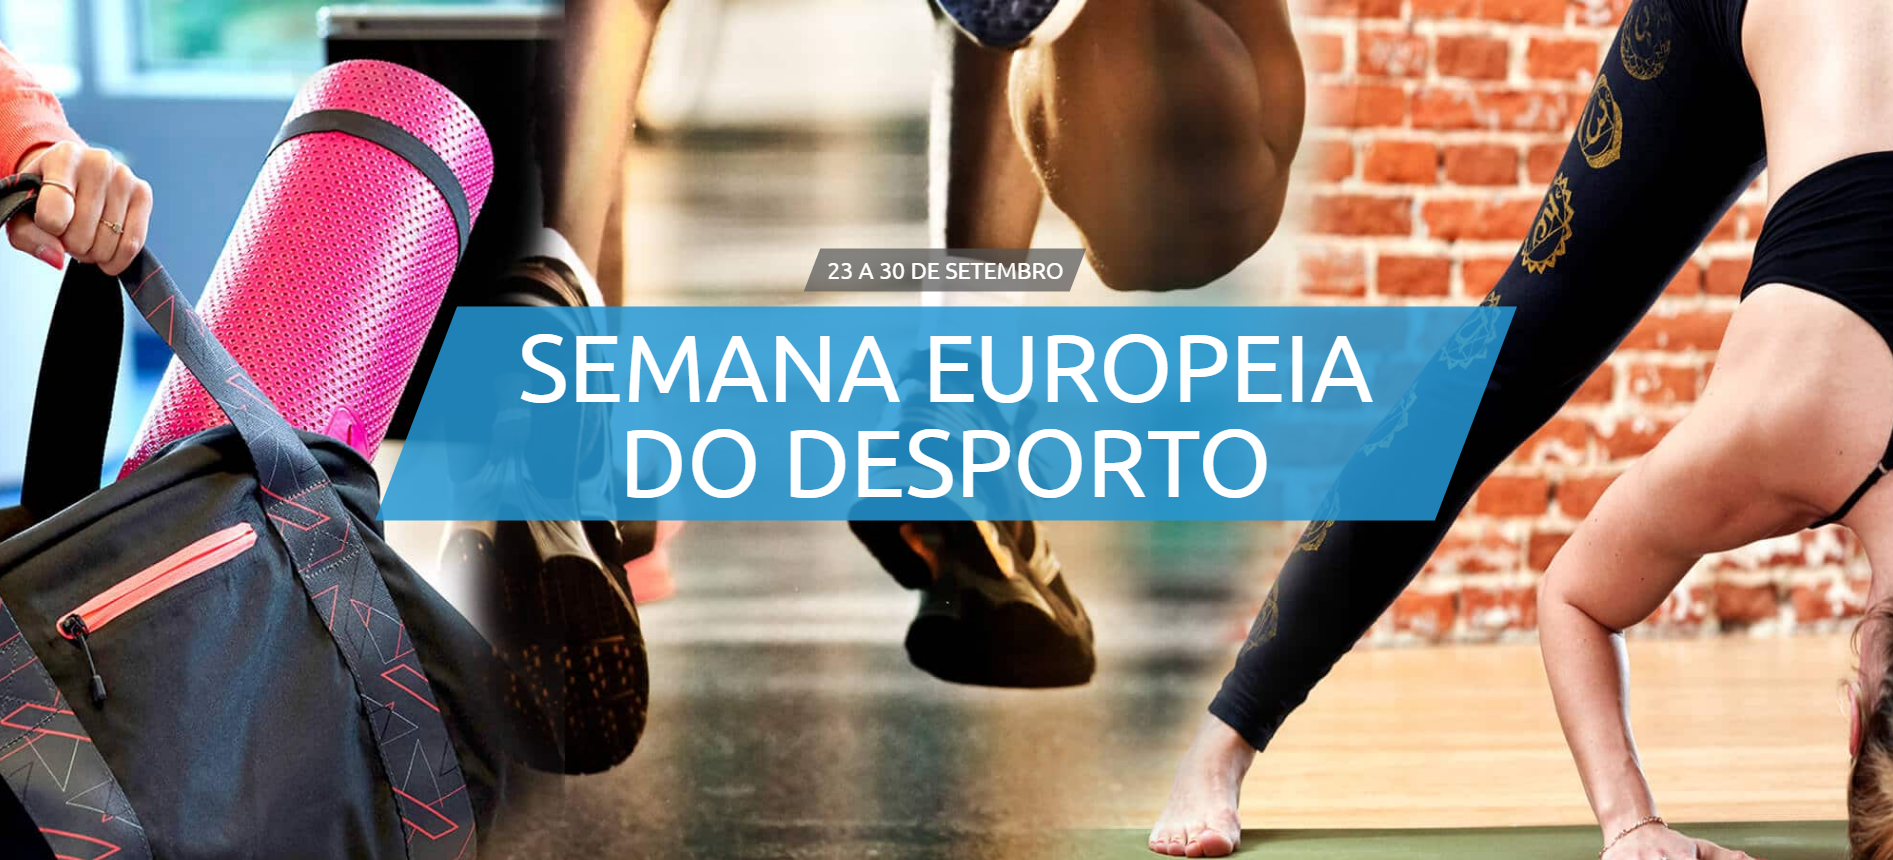 Município de Vila Franca de Xira celebra a Semana Europeia do Desporto 